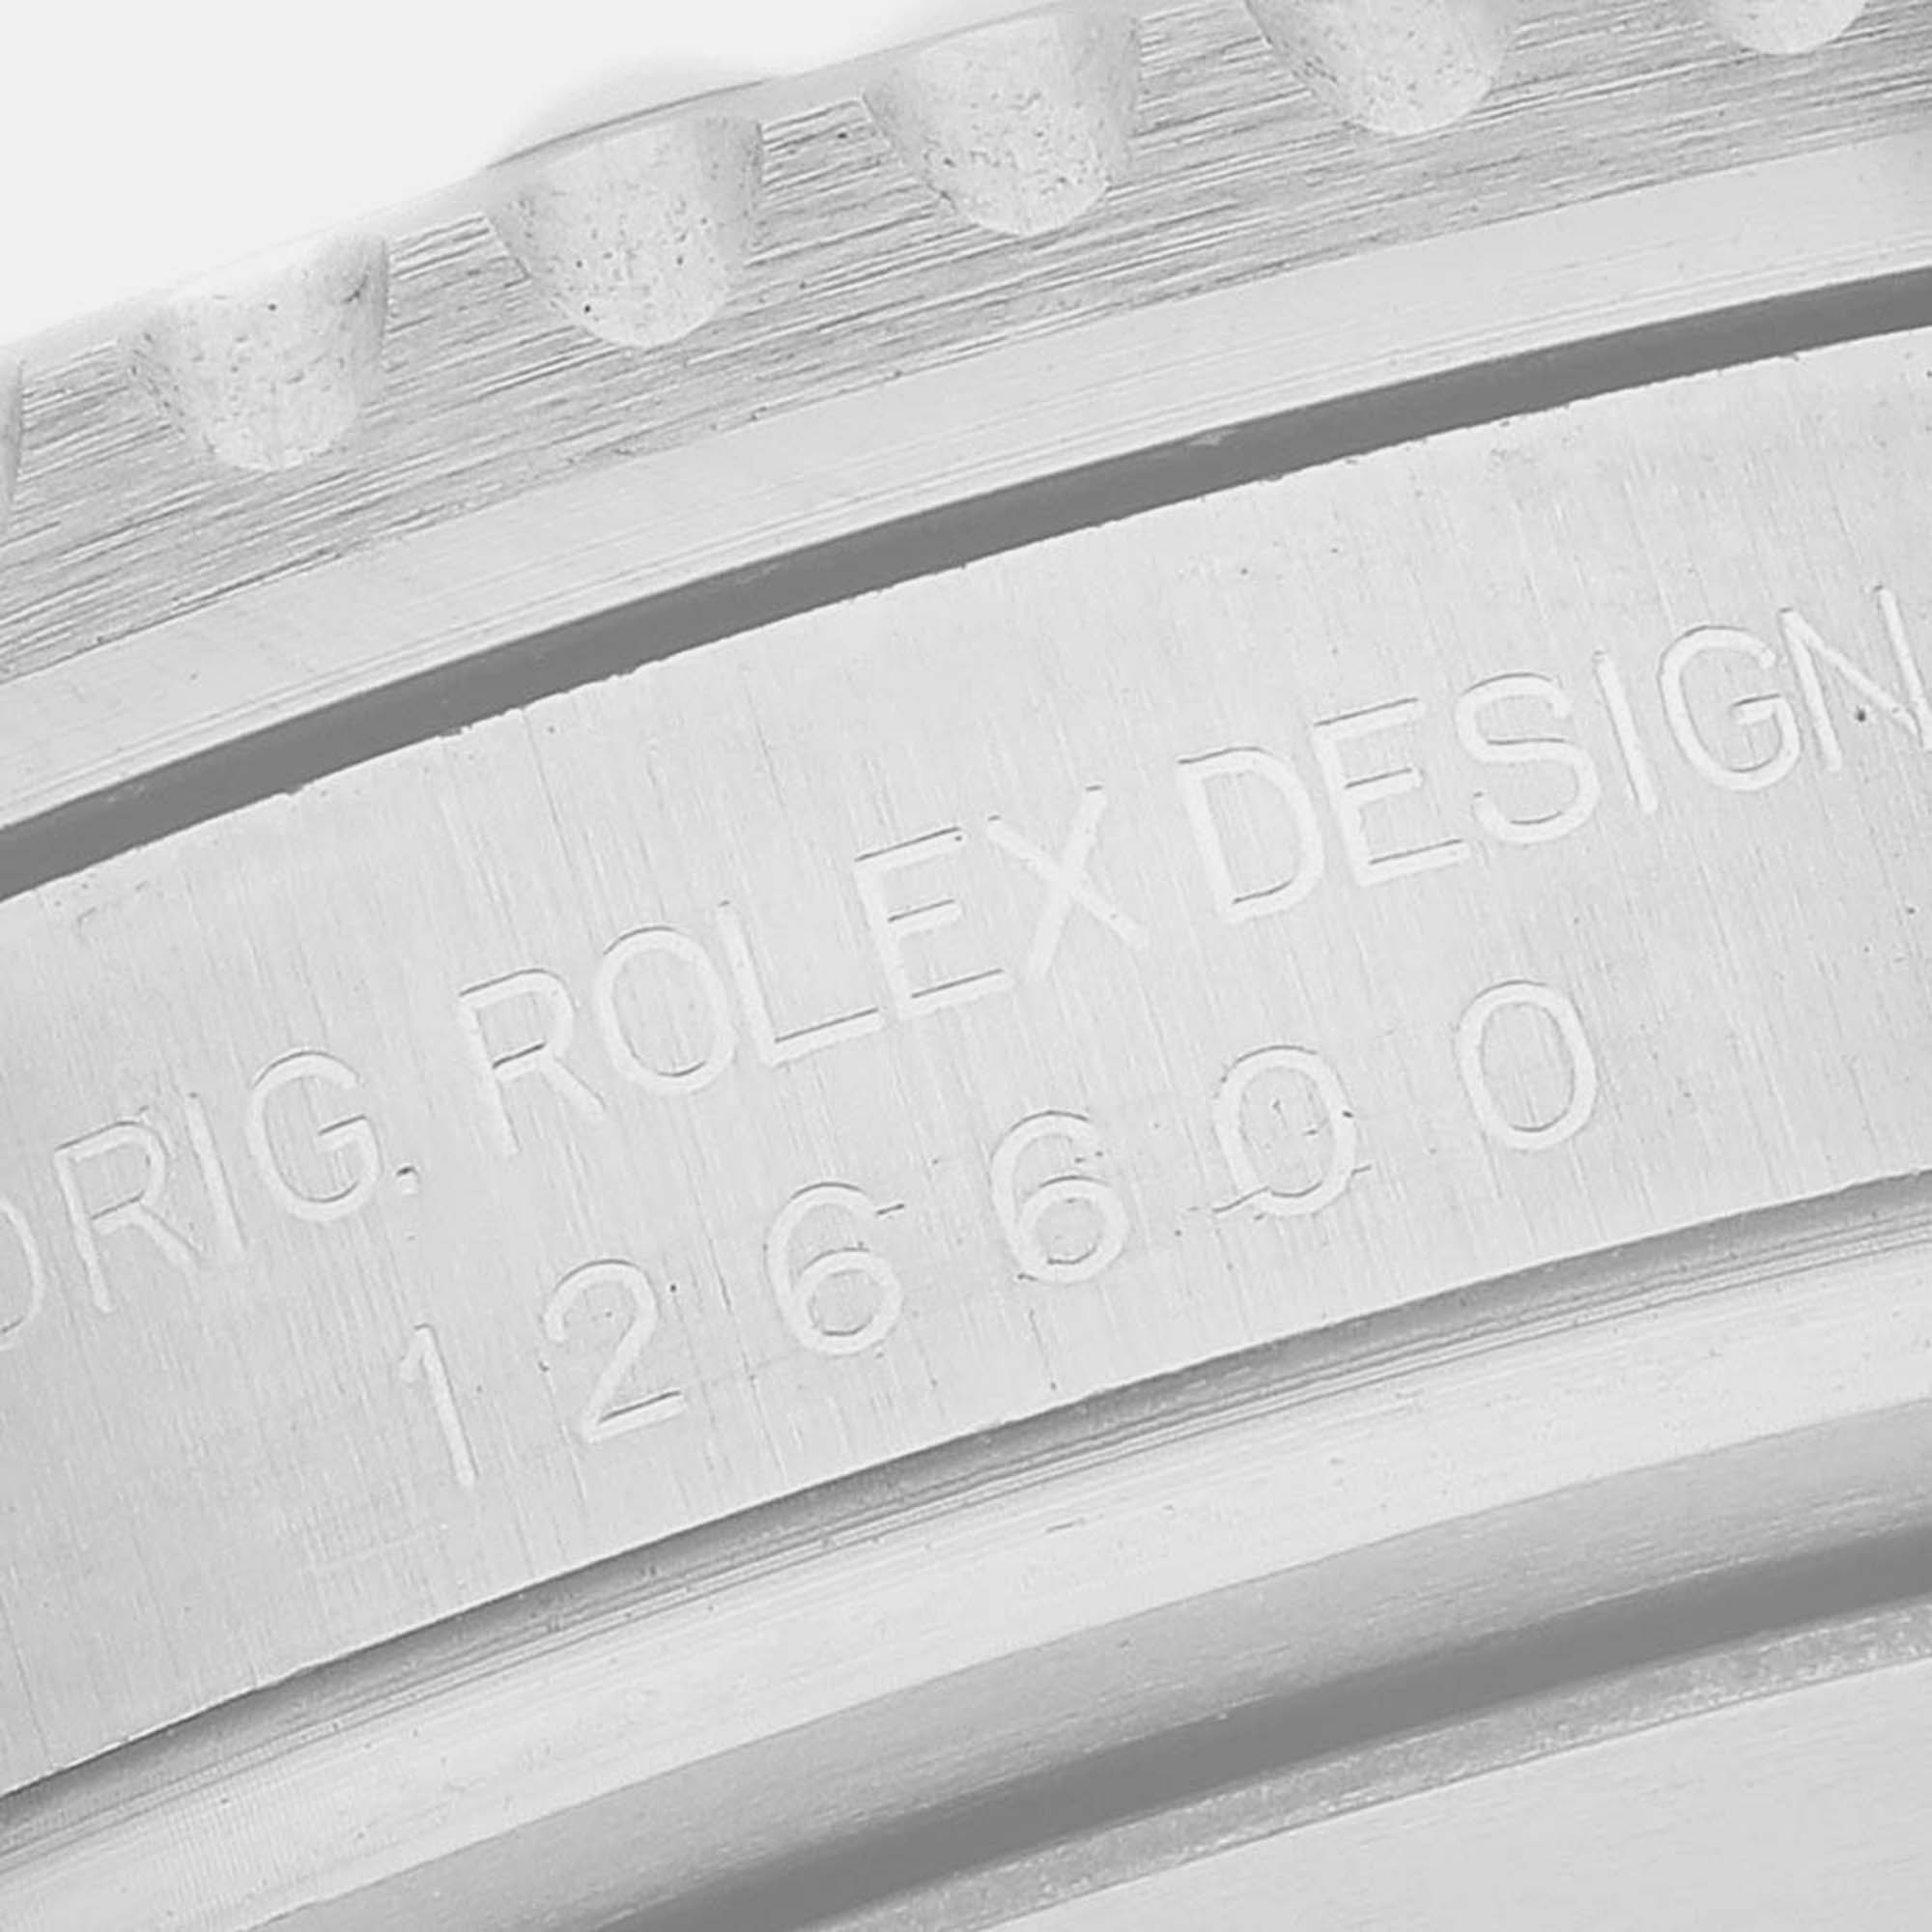 Rolex Seadweller 43mm 50th Anniversary Steel Mens Watch 126600 Box Card